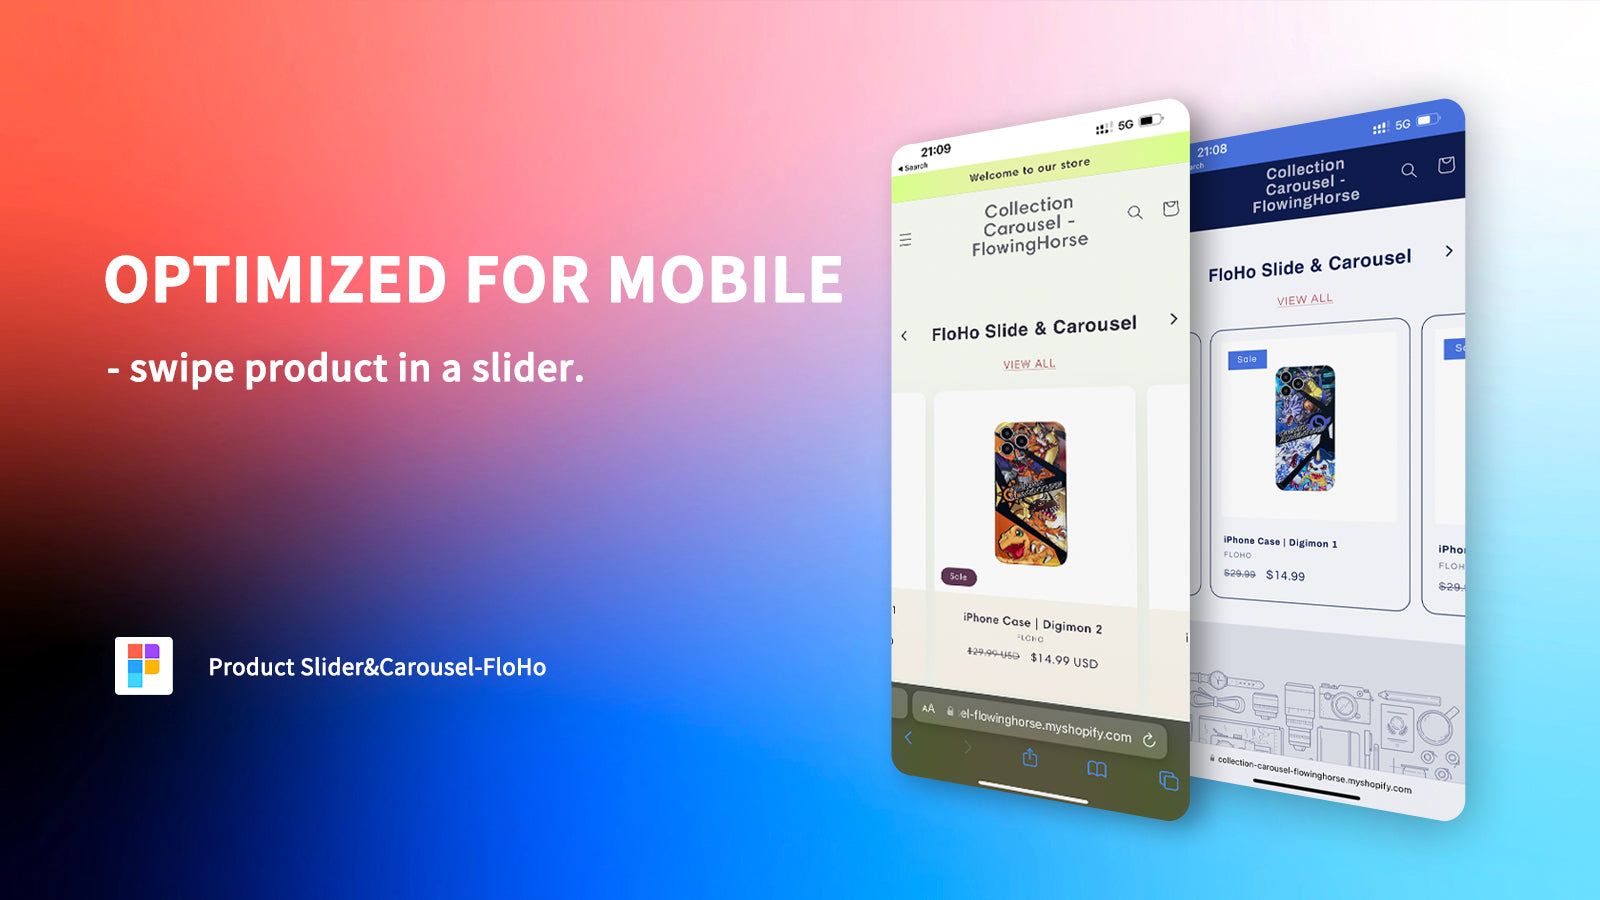 FloHo Product Carousel - Optimized for Mobile